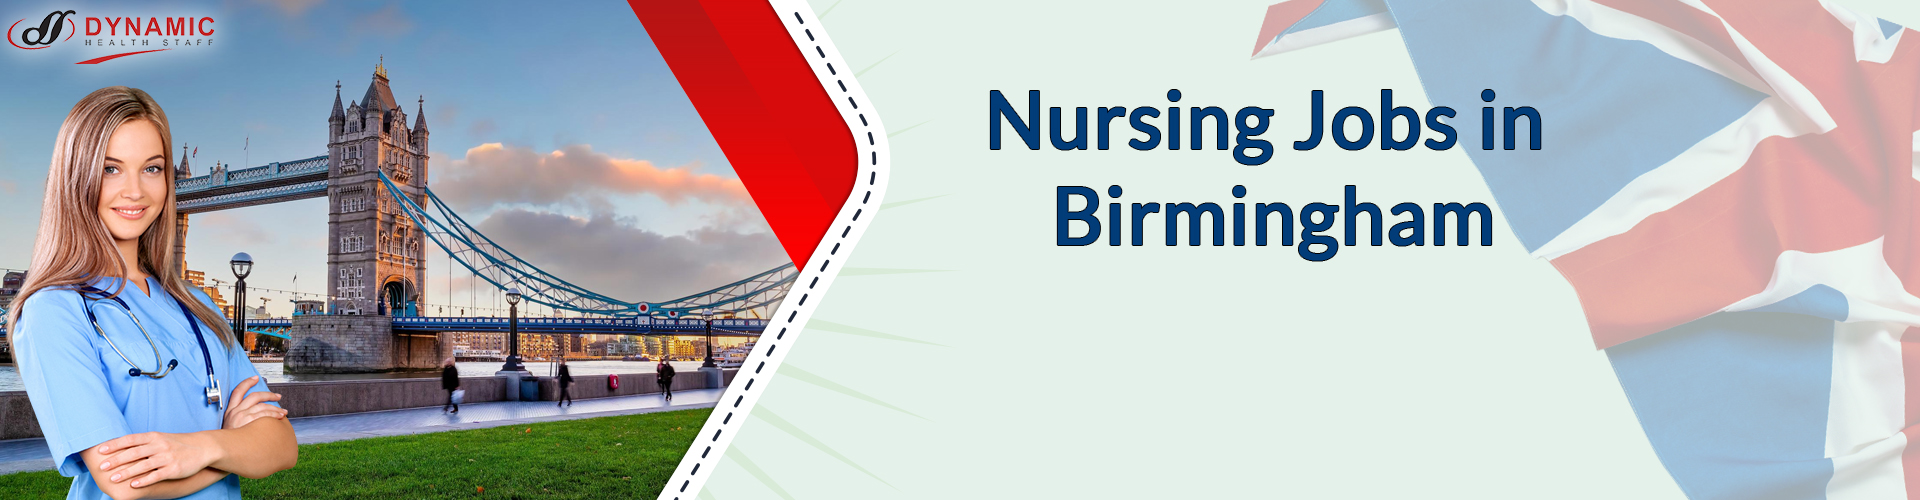 Nursing Jobs in Birmingham